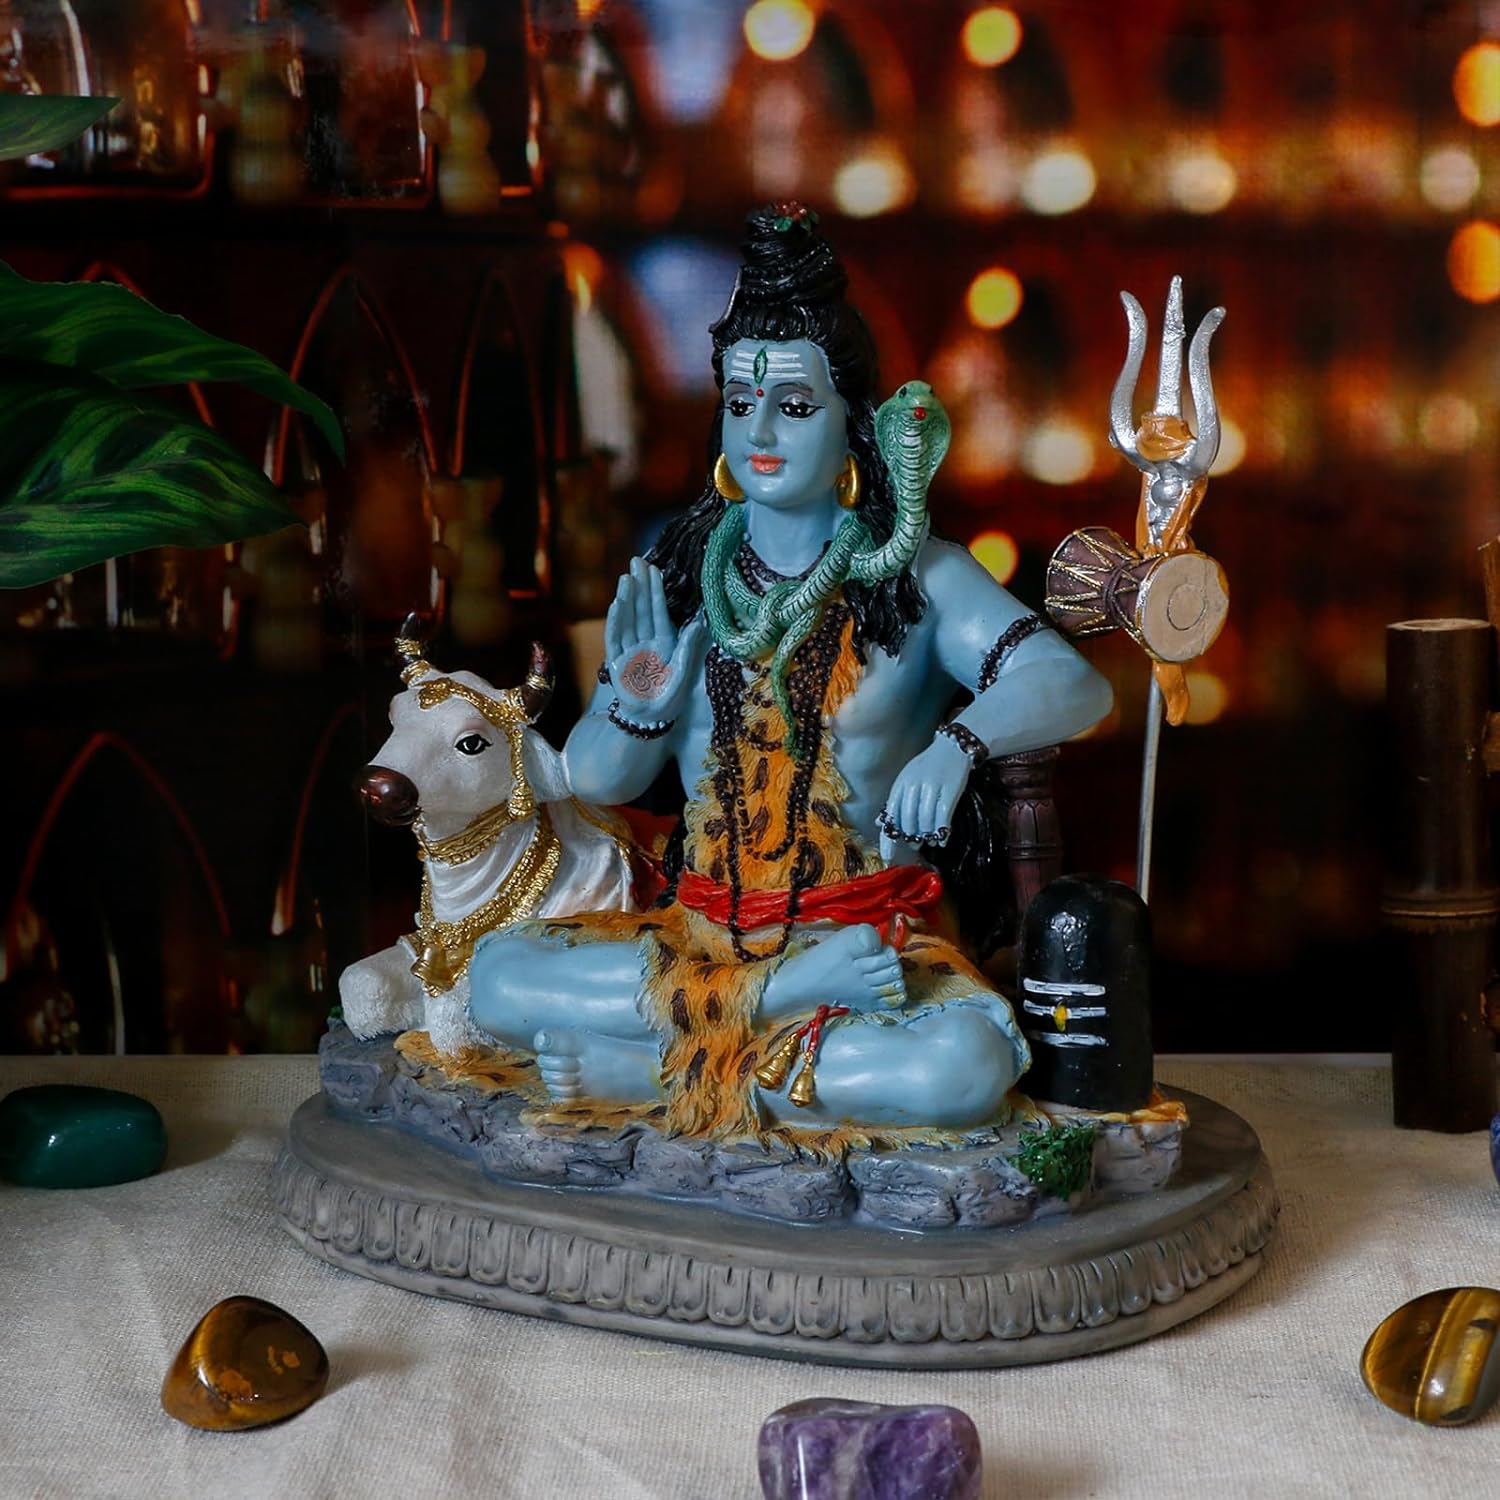 Indian God Lord Shiva Statue - Gifts for Indian Hindu 6.7H Shiva Idol Statue W/ Cow Indian Return Gifts for Guest Yoga Studio Meditation Room Spiritual Decor Home Office Mandir Altar Pooja Item